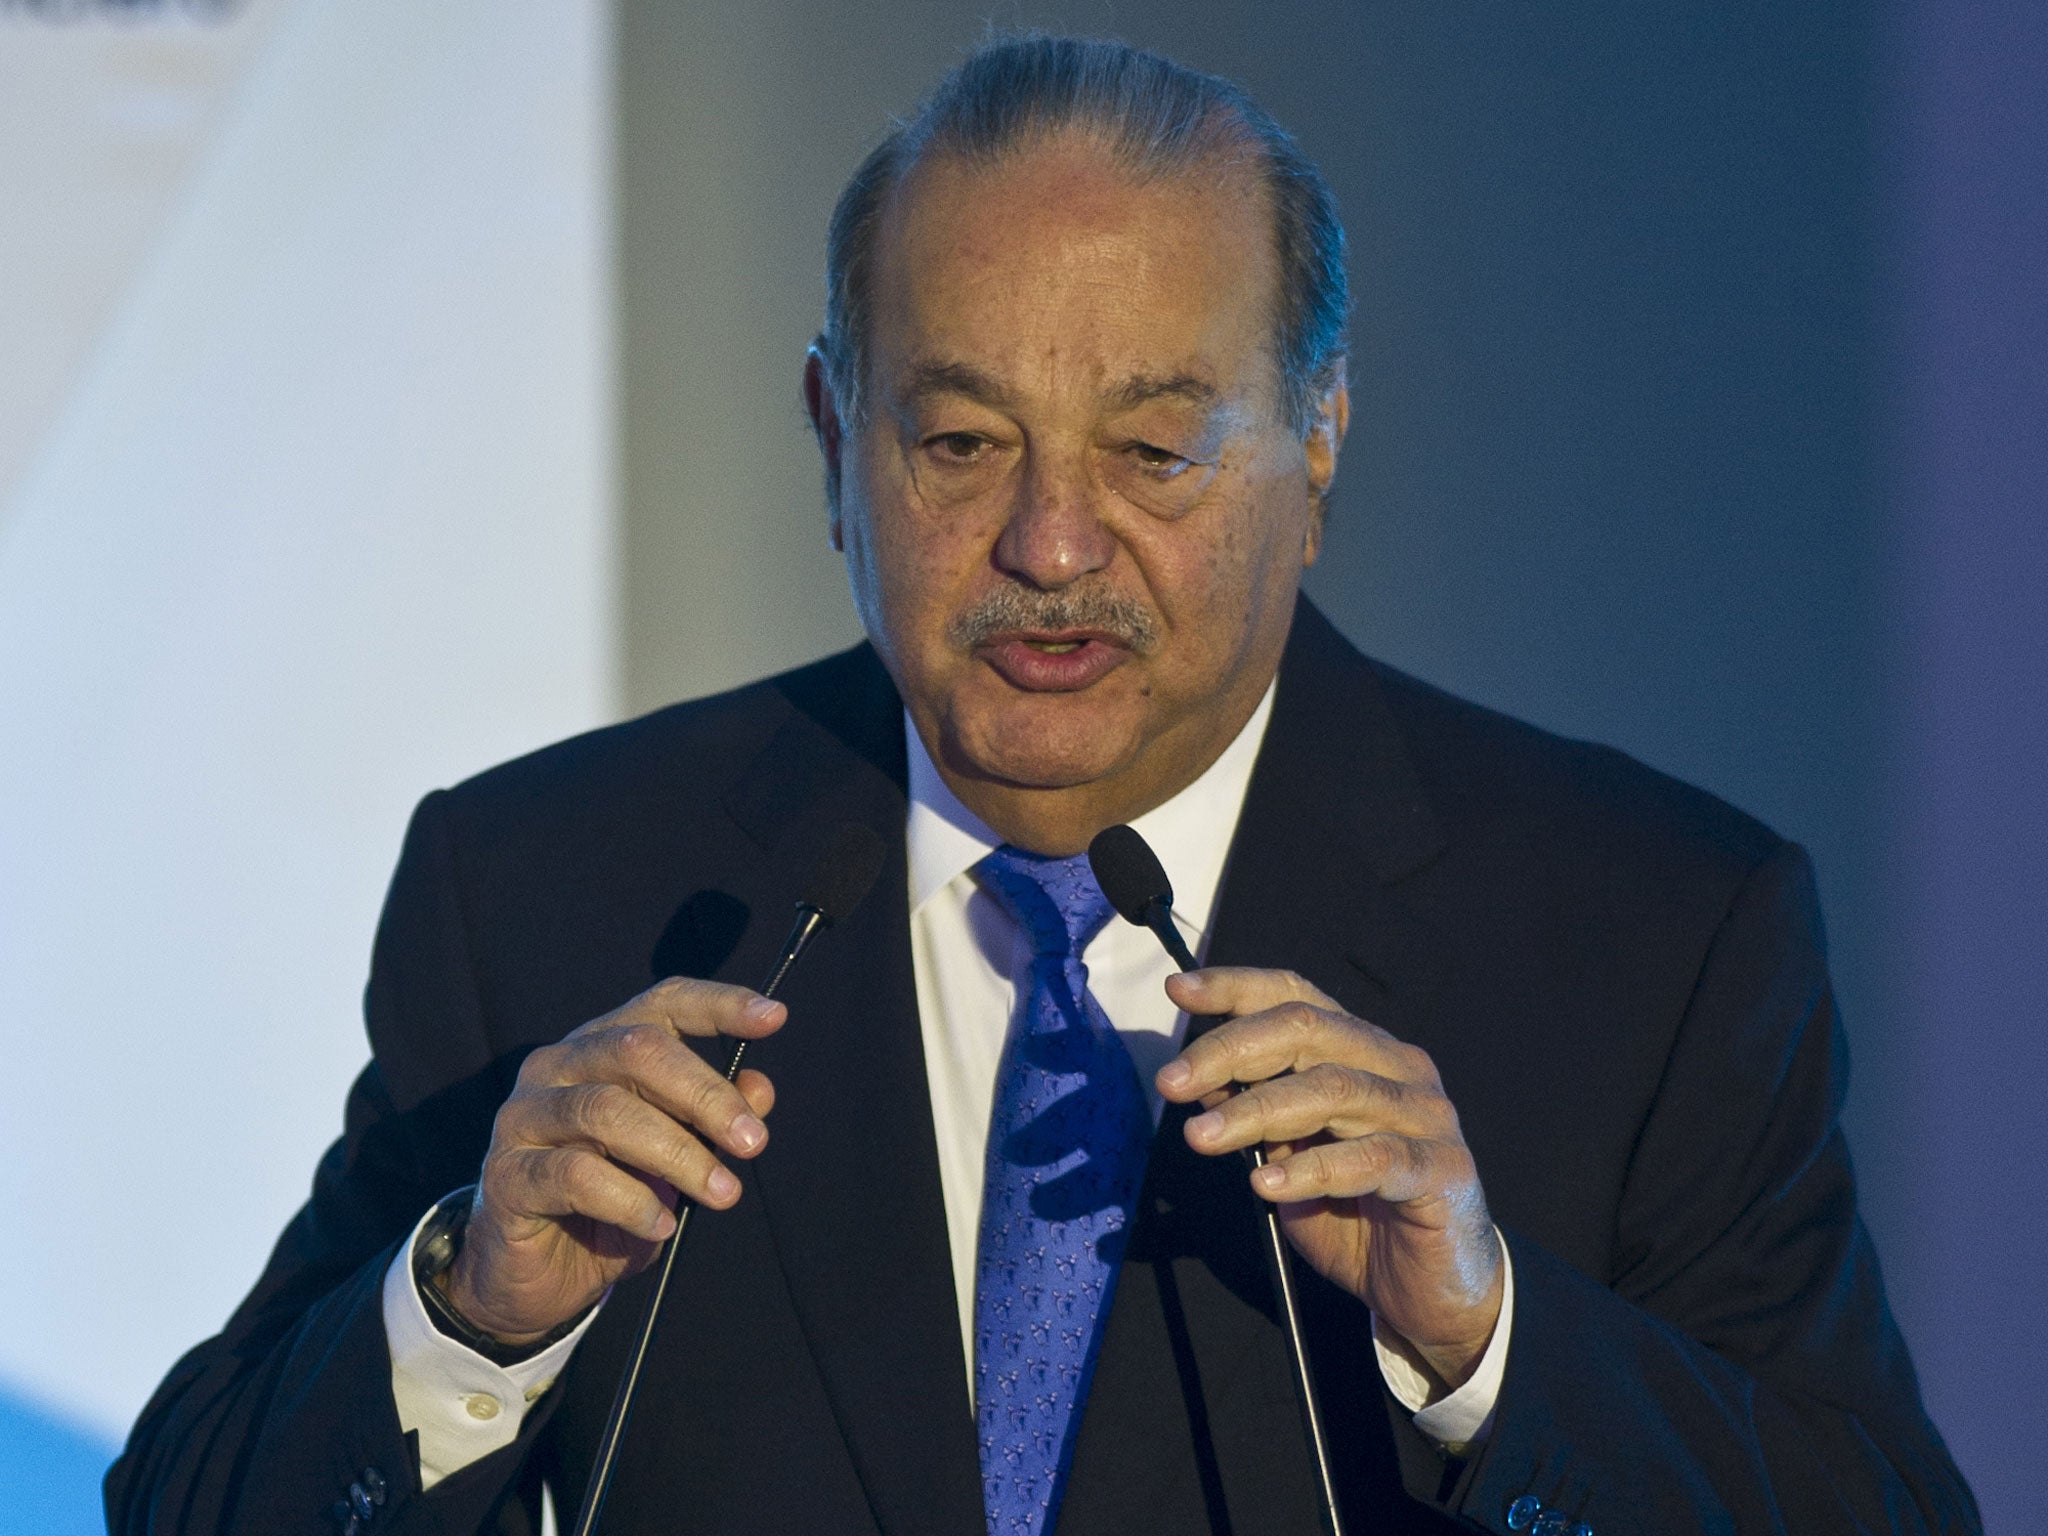 Carlos Slim Helu, Mexican telecoms mogul